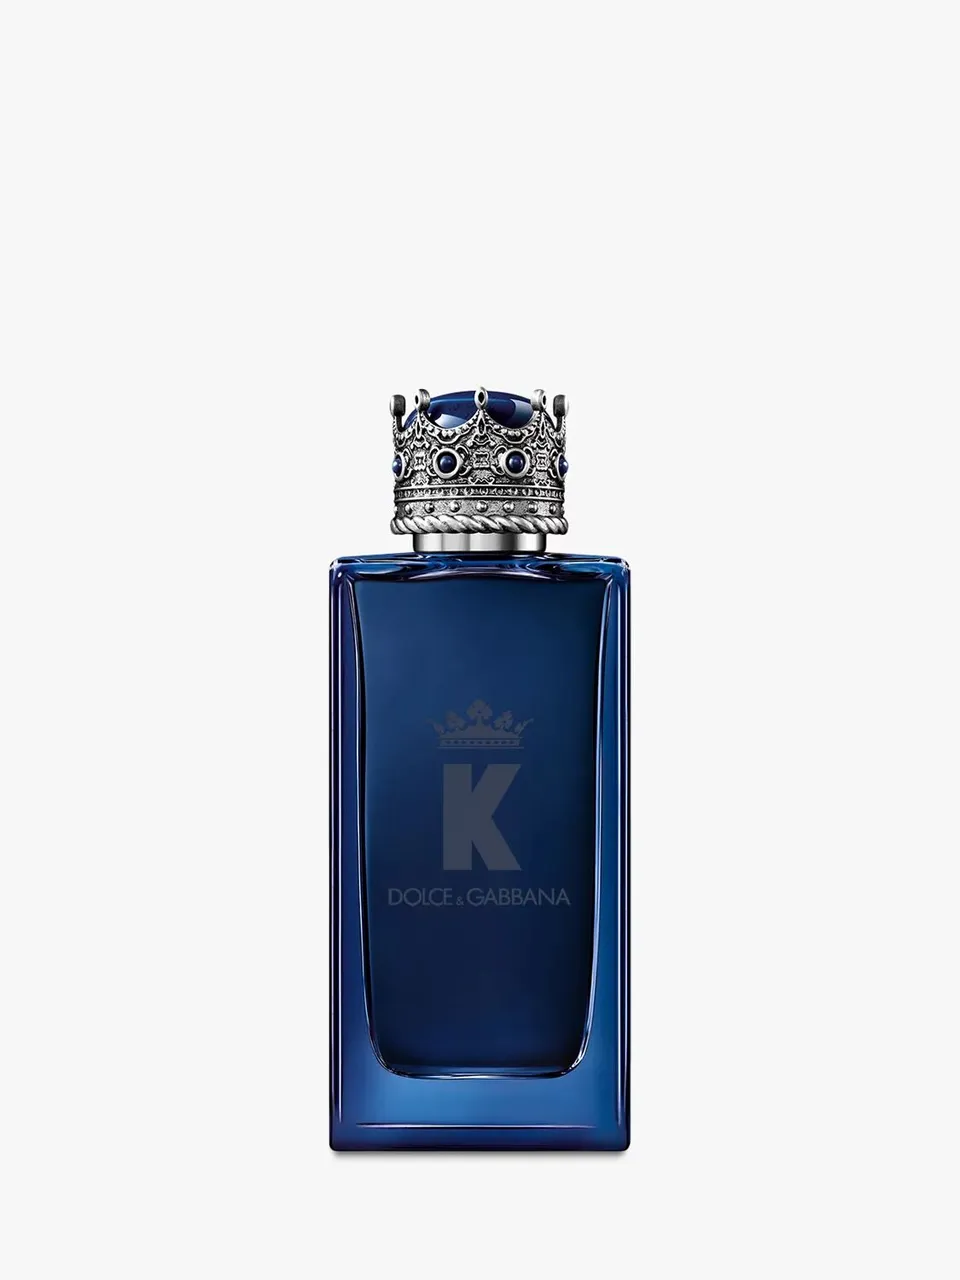 K by Dolce & Gabbana Eau de Parfum Intense - Male - Size: 100ml